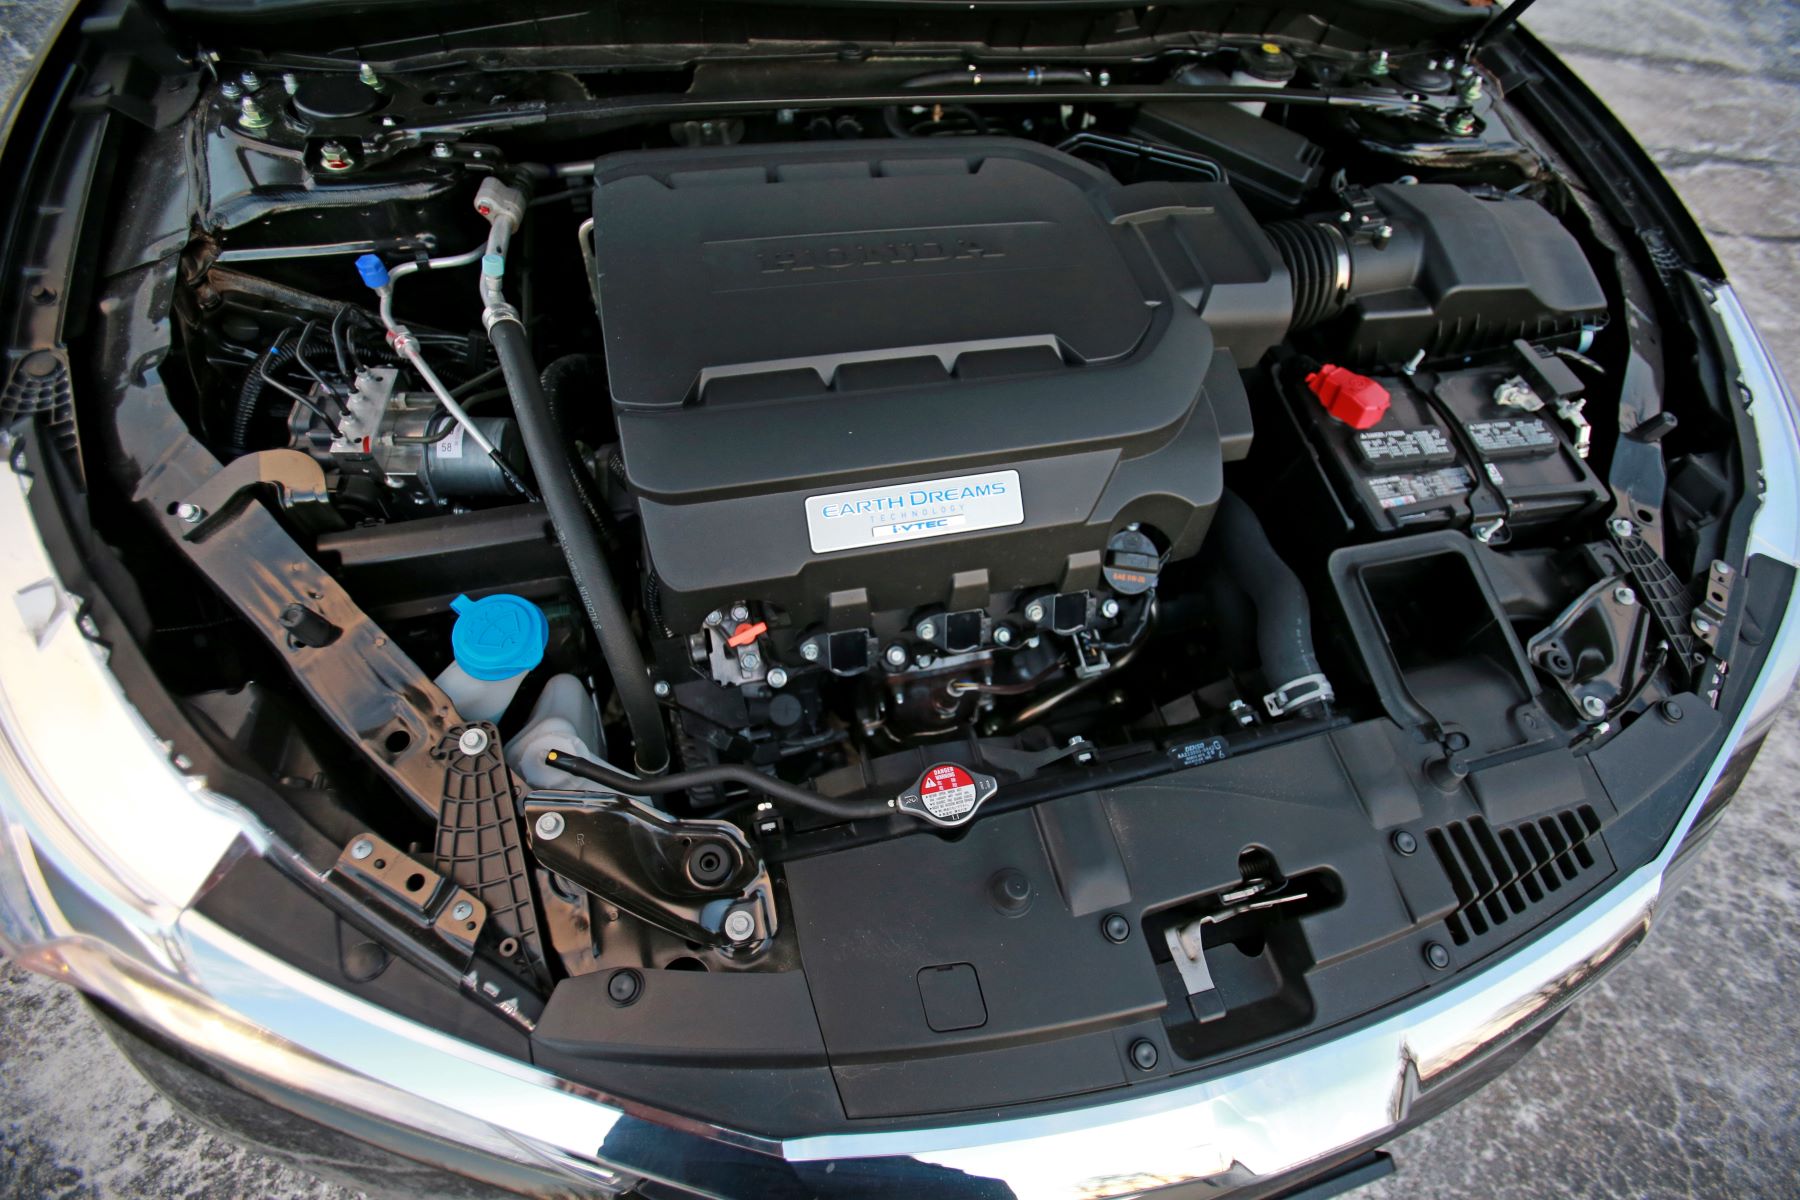 A V6 engine under the hood of a 2016 Honda Accord EX-L midsize sedan model